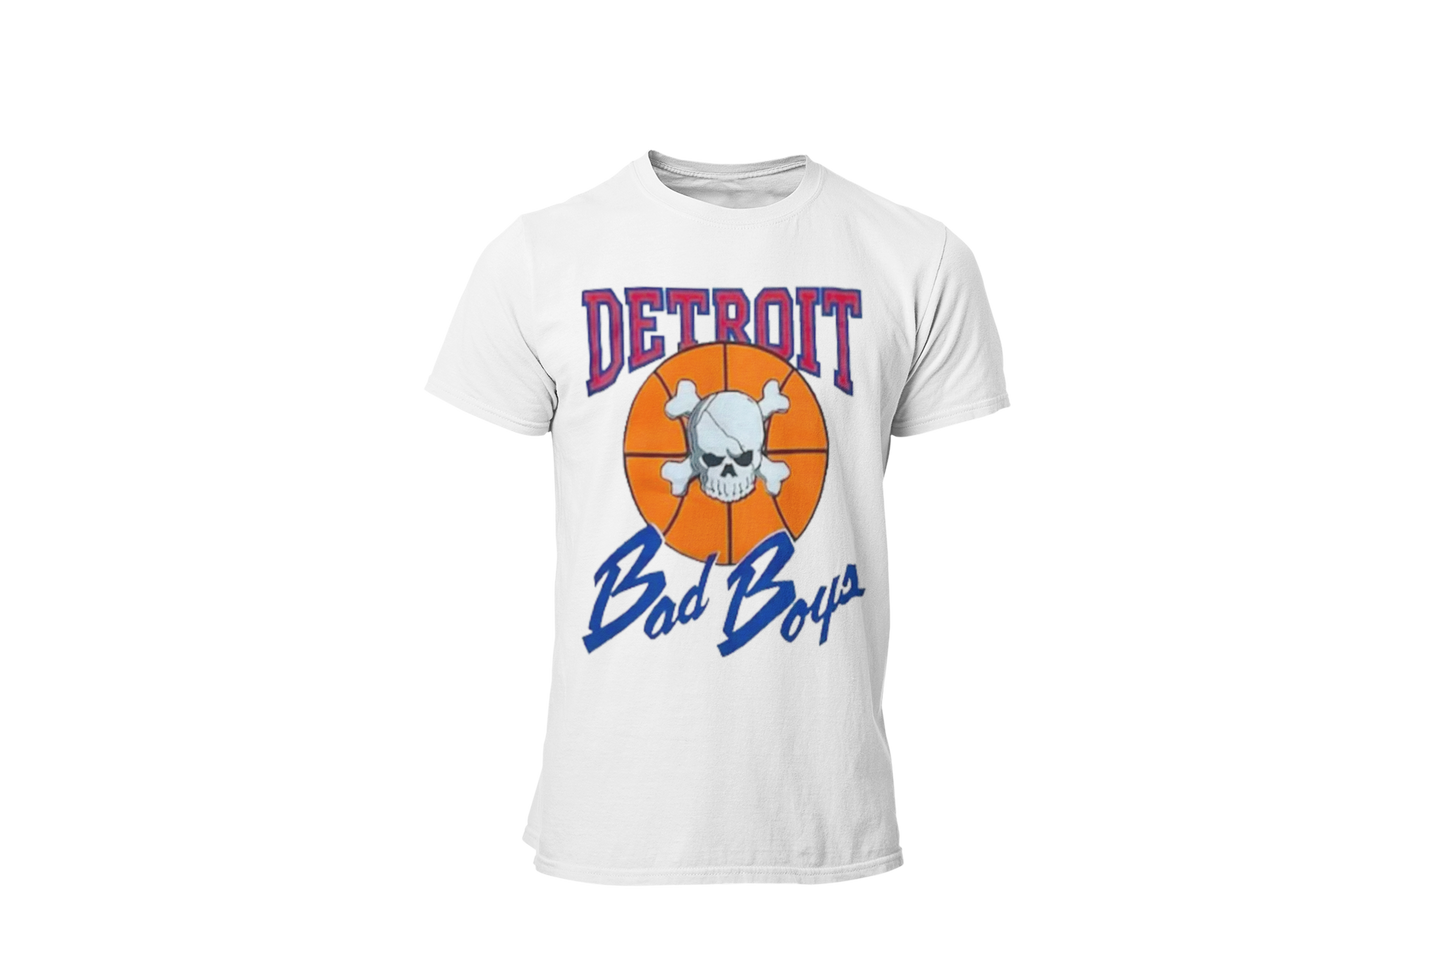 Detroit Bad Boys T-Shirt Flava Pack (White/Red/Blue)